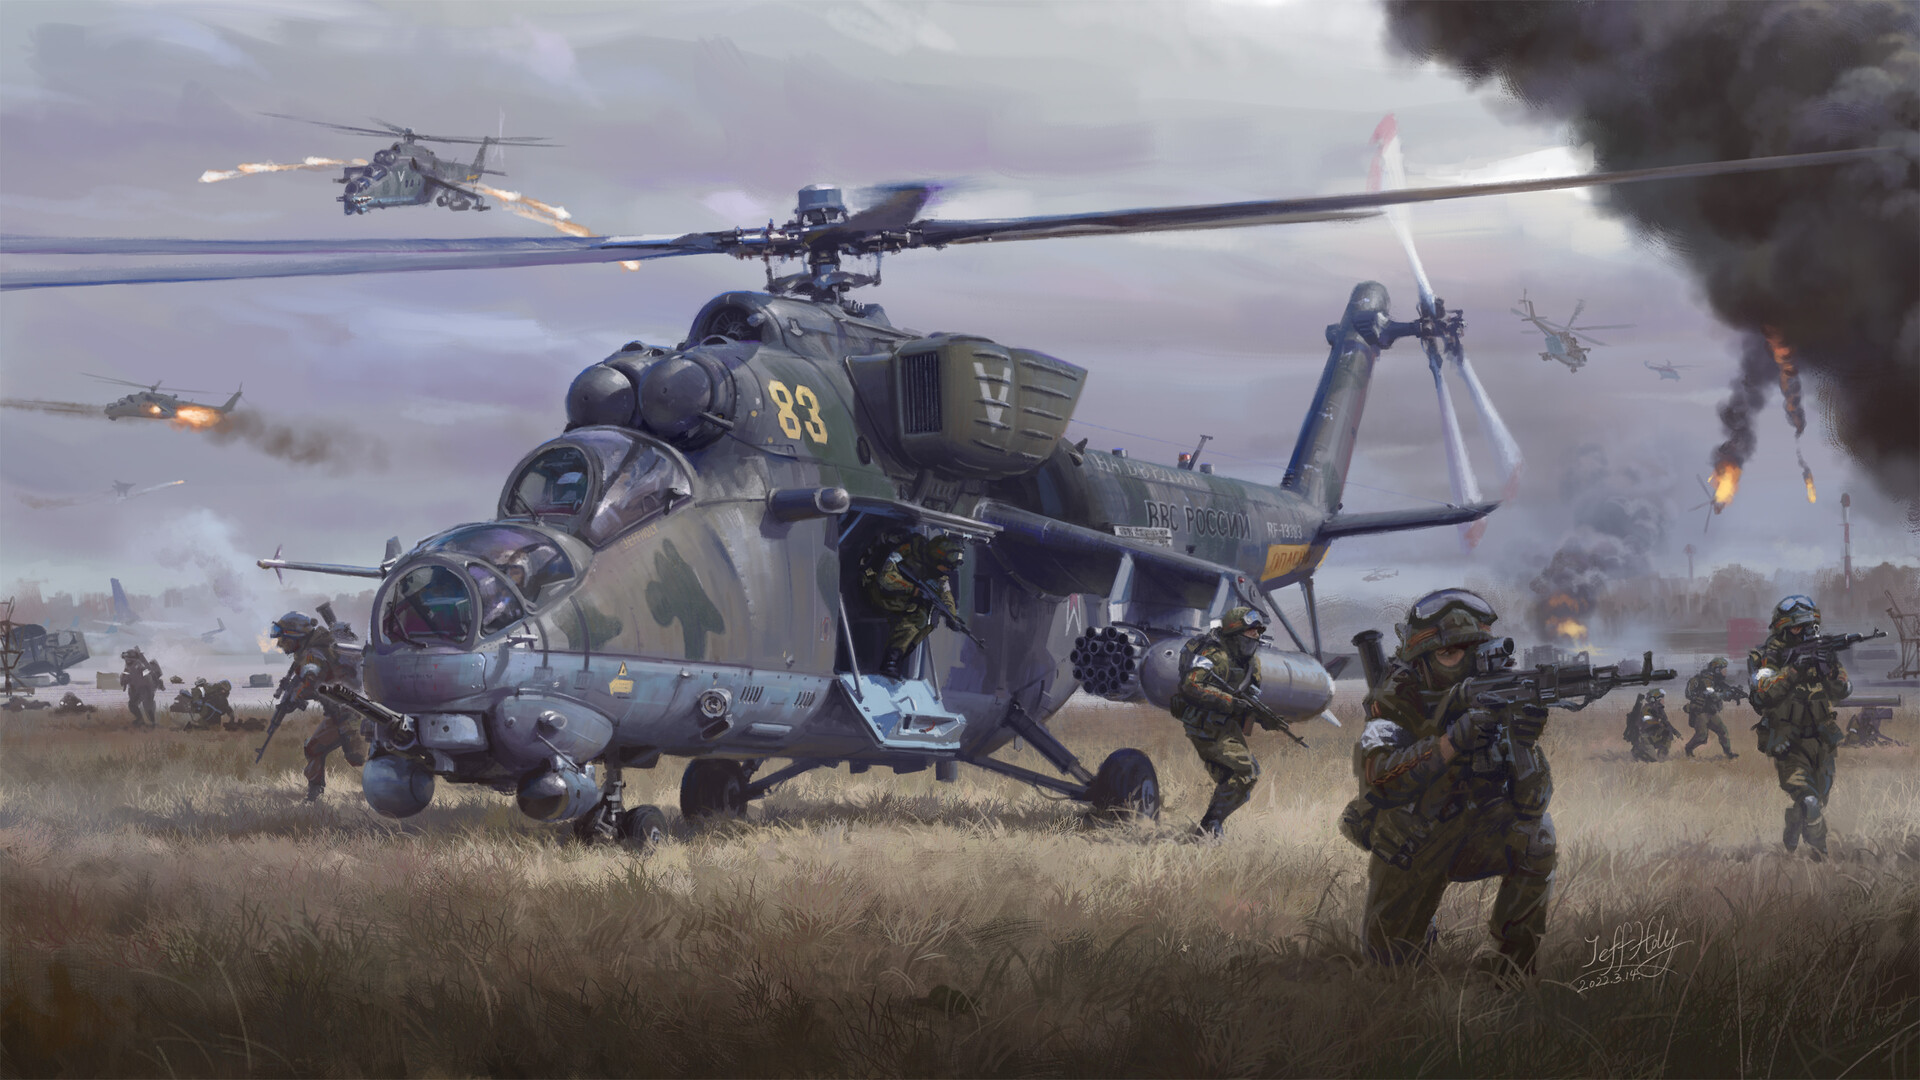 Армия Z: military art by Jeff Holy